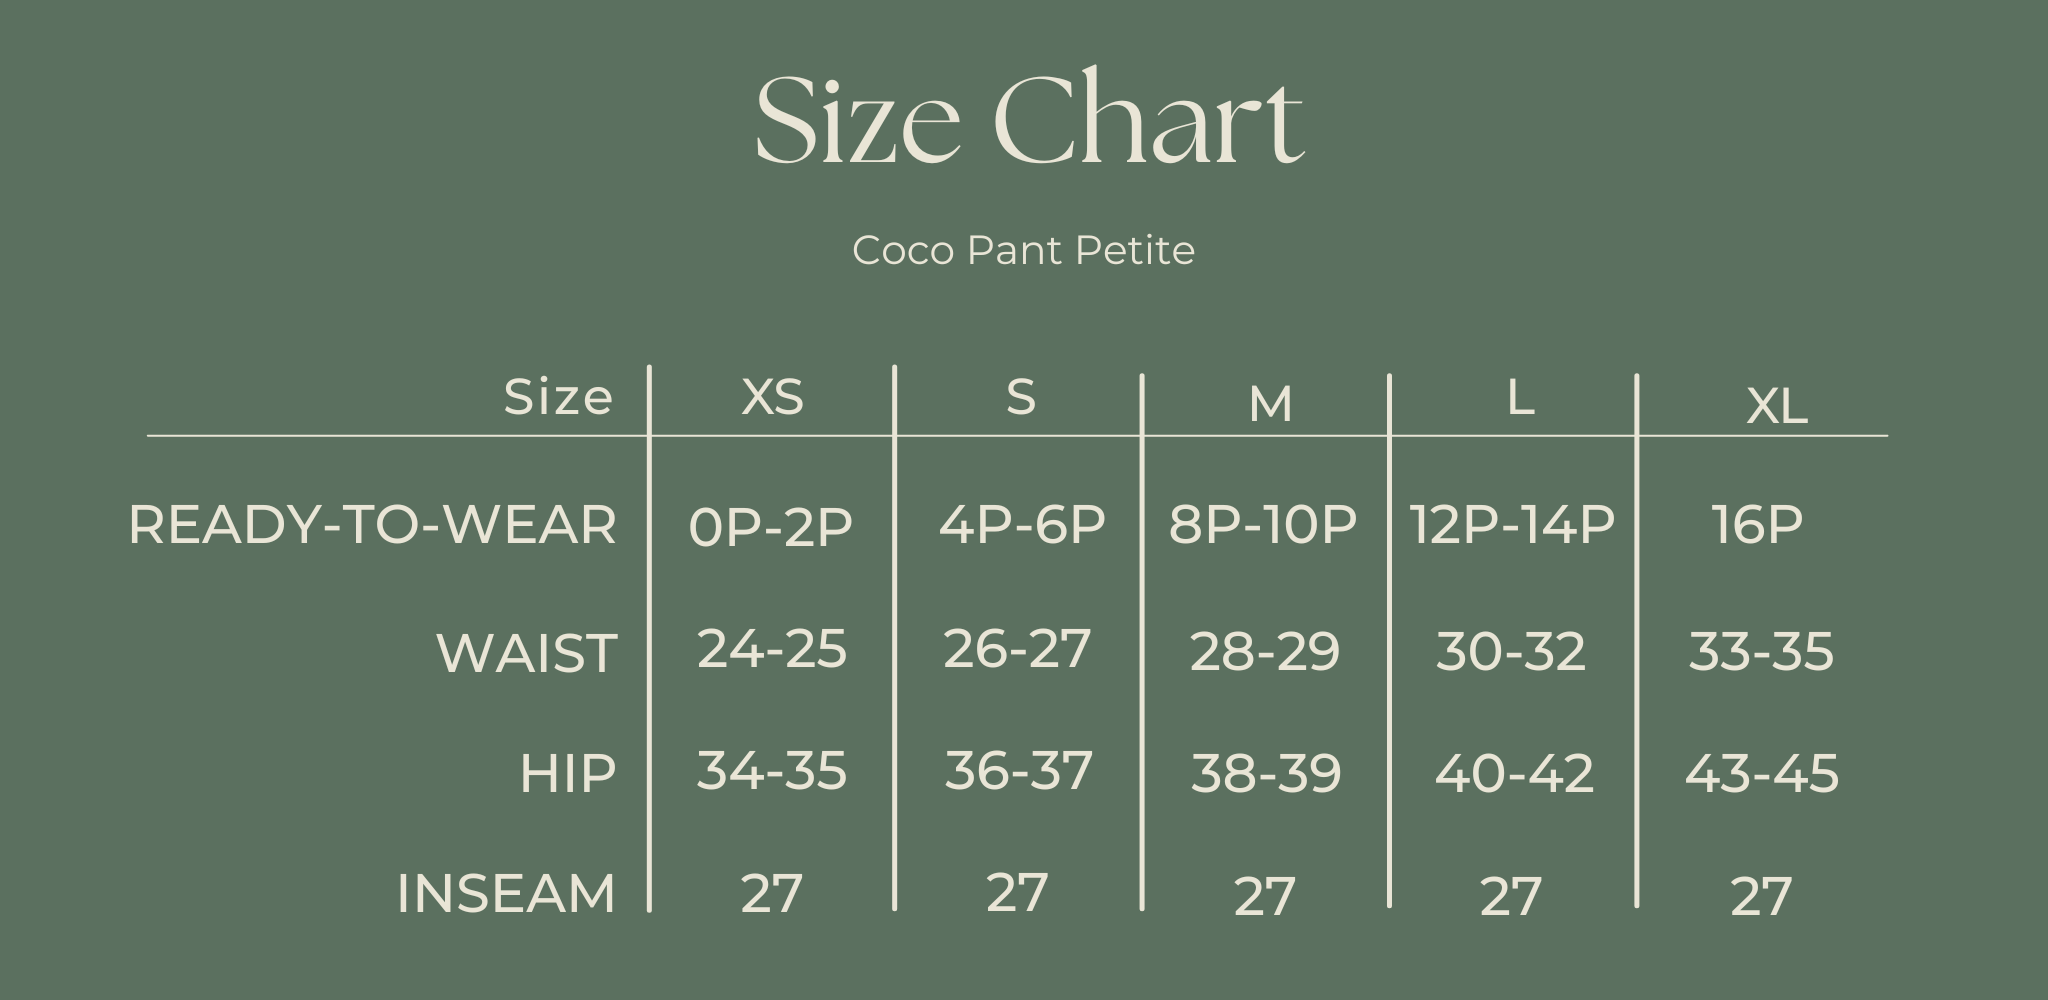 Coco Pant Petite Size Chart 11/8/2022